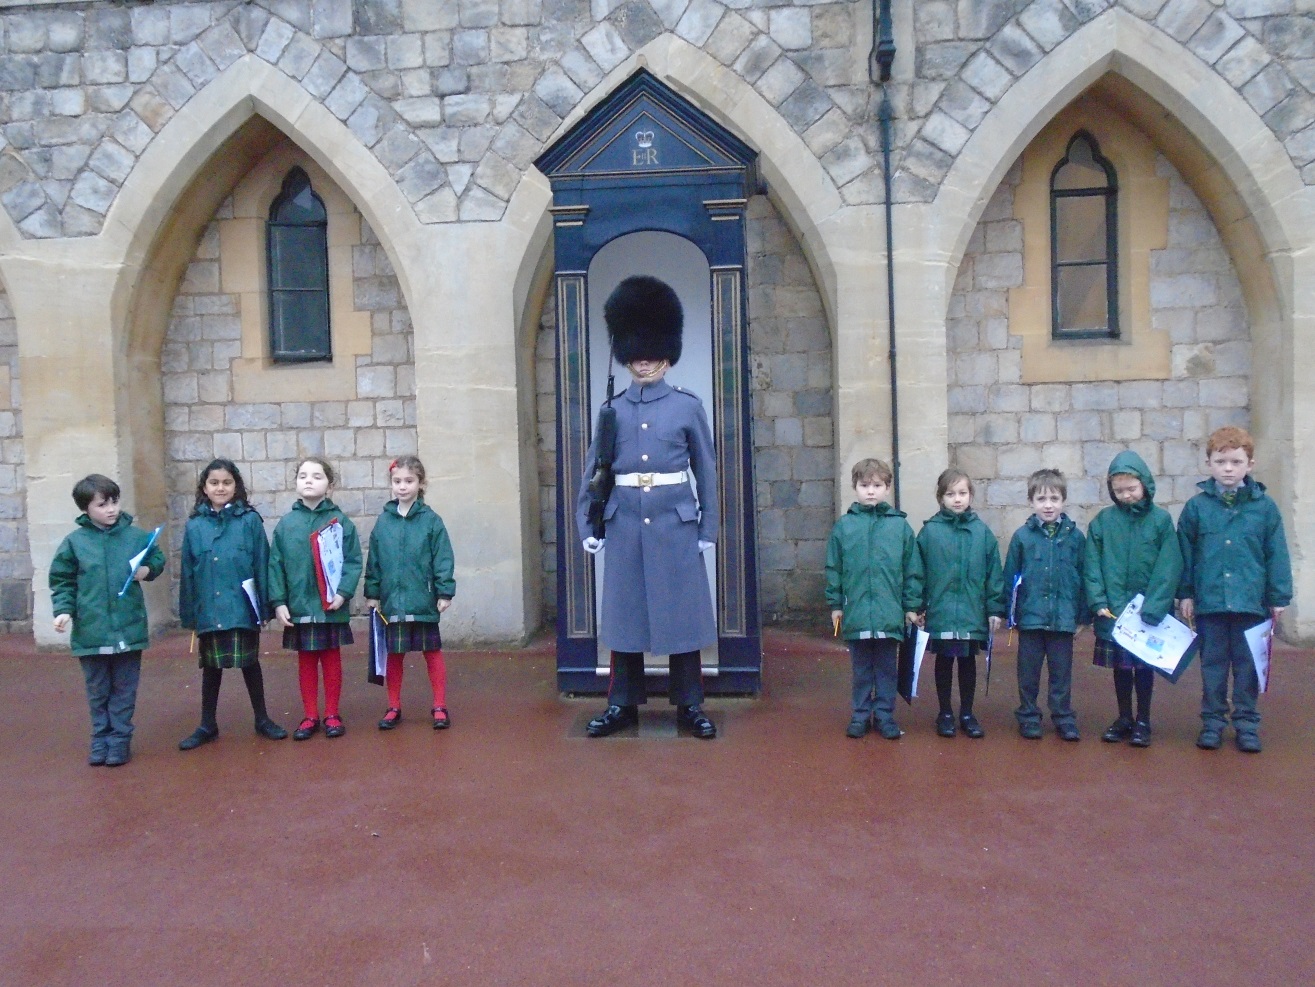 St Benedict's Junior School, Ealing, west London, visit Windsor Castle